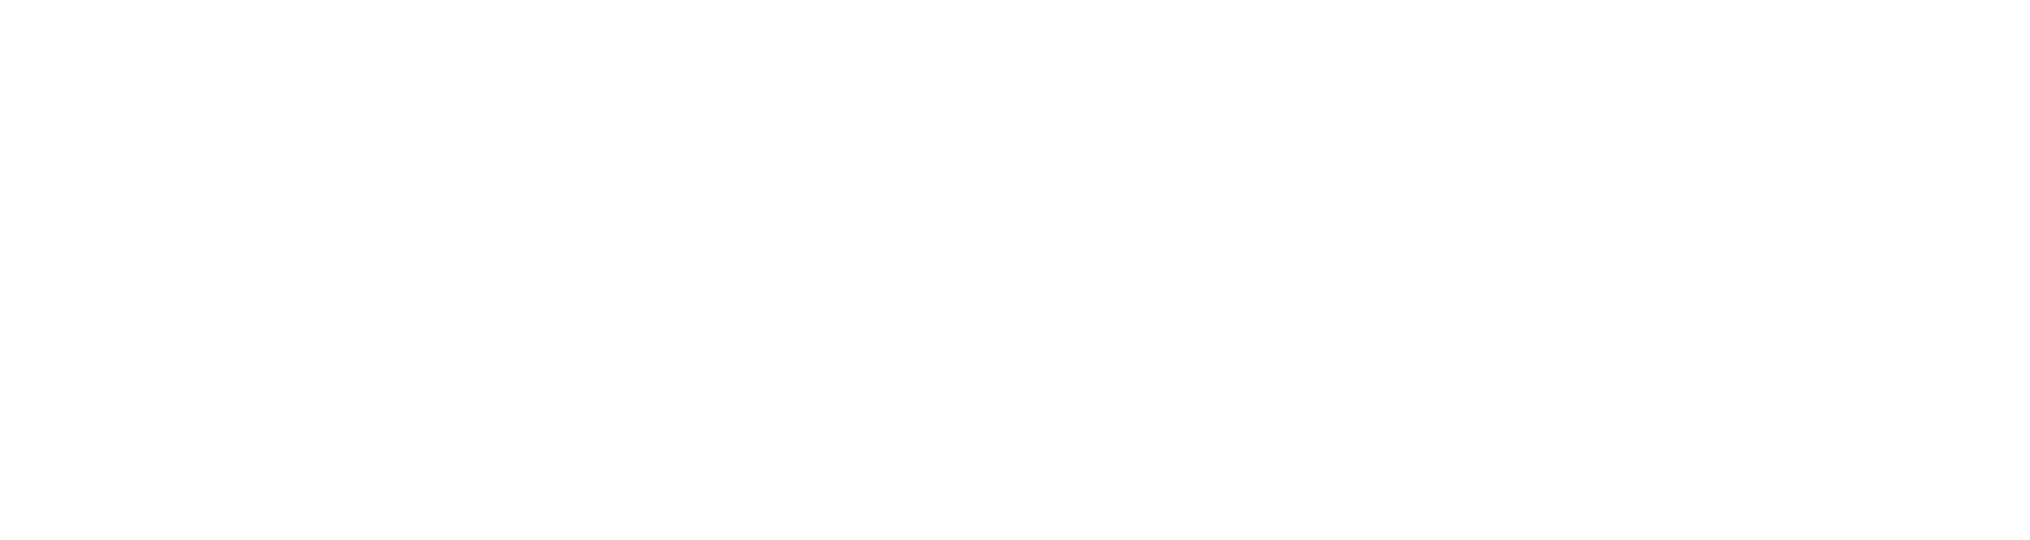 ub-logo alma mater